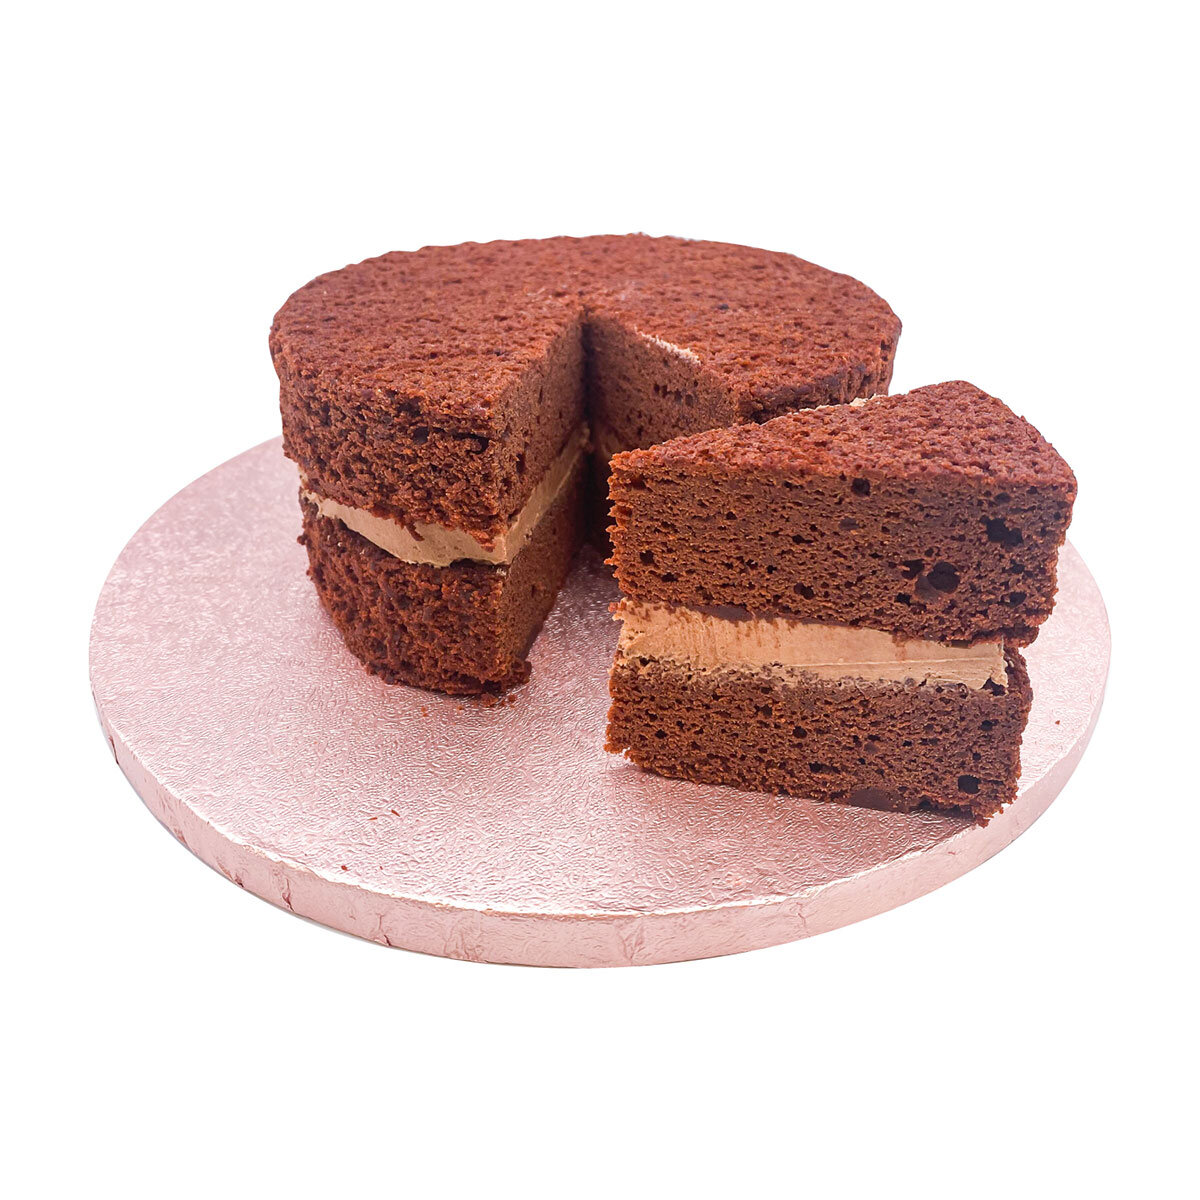 Chocolate sponge cake with slice